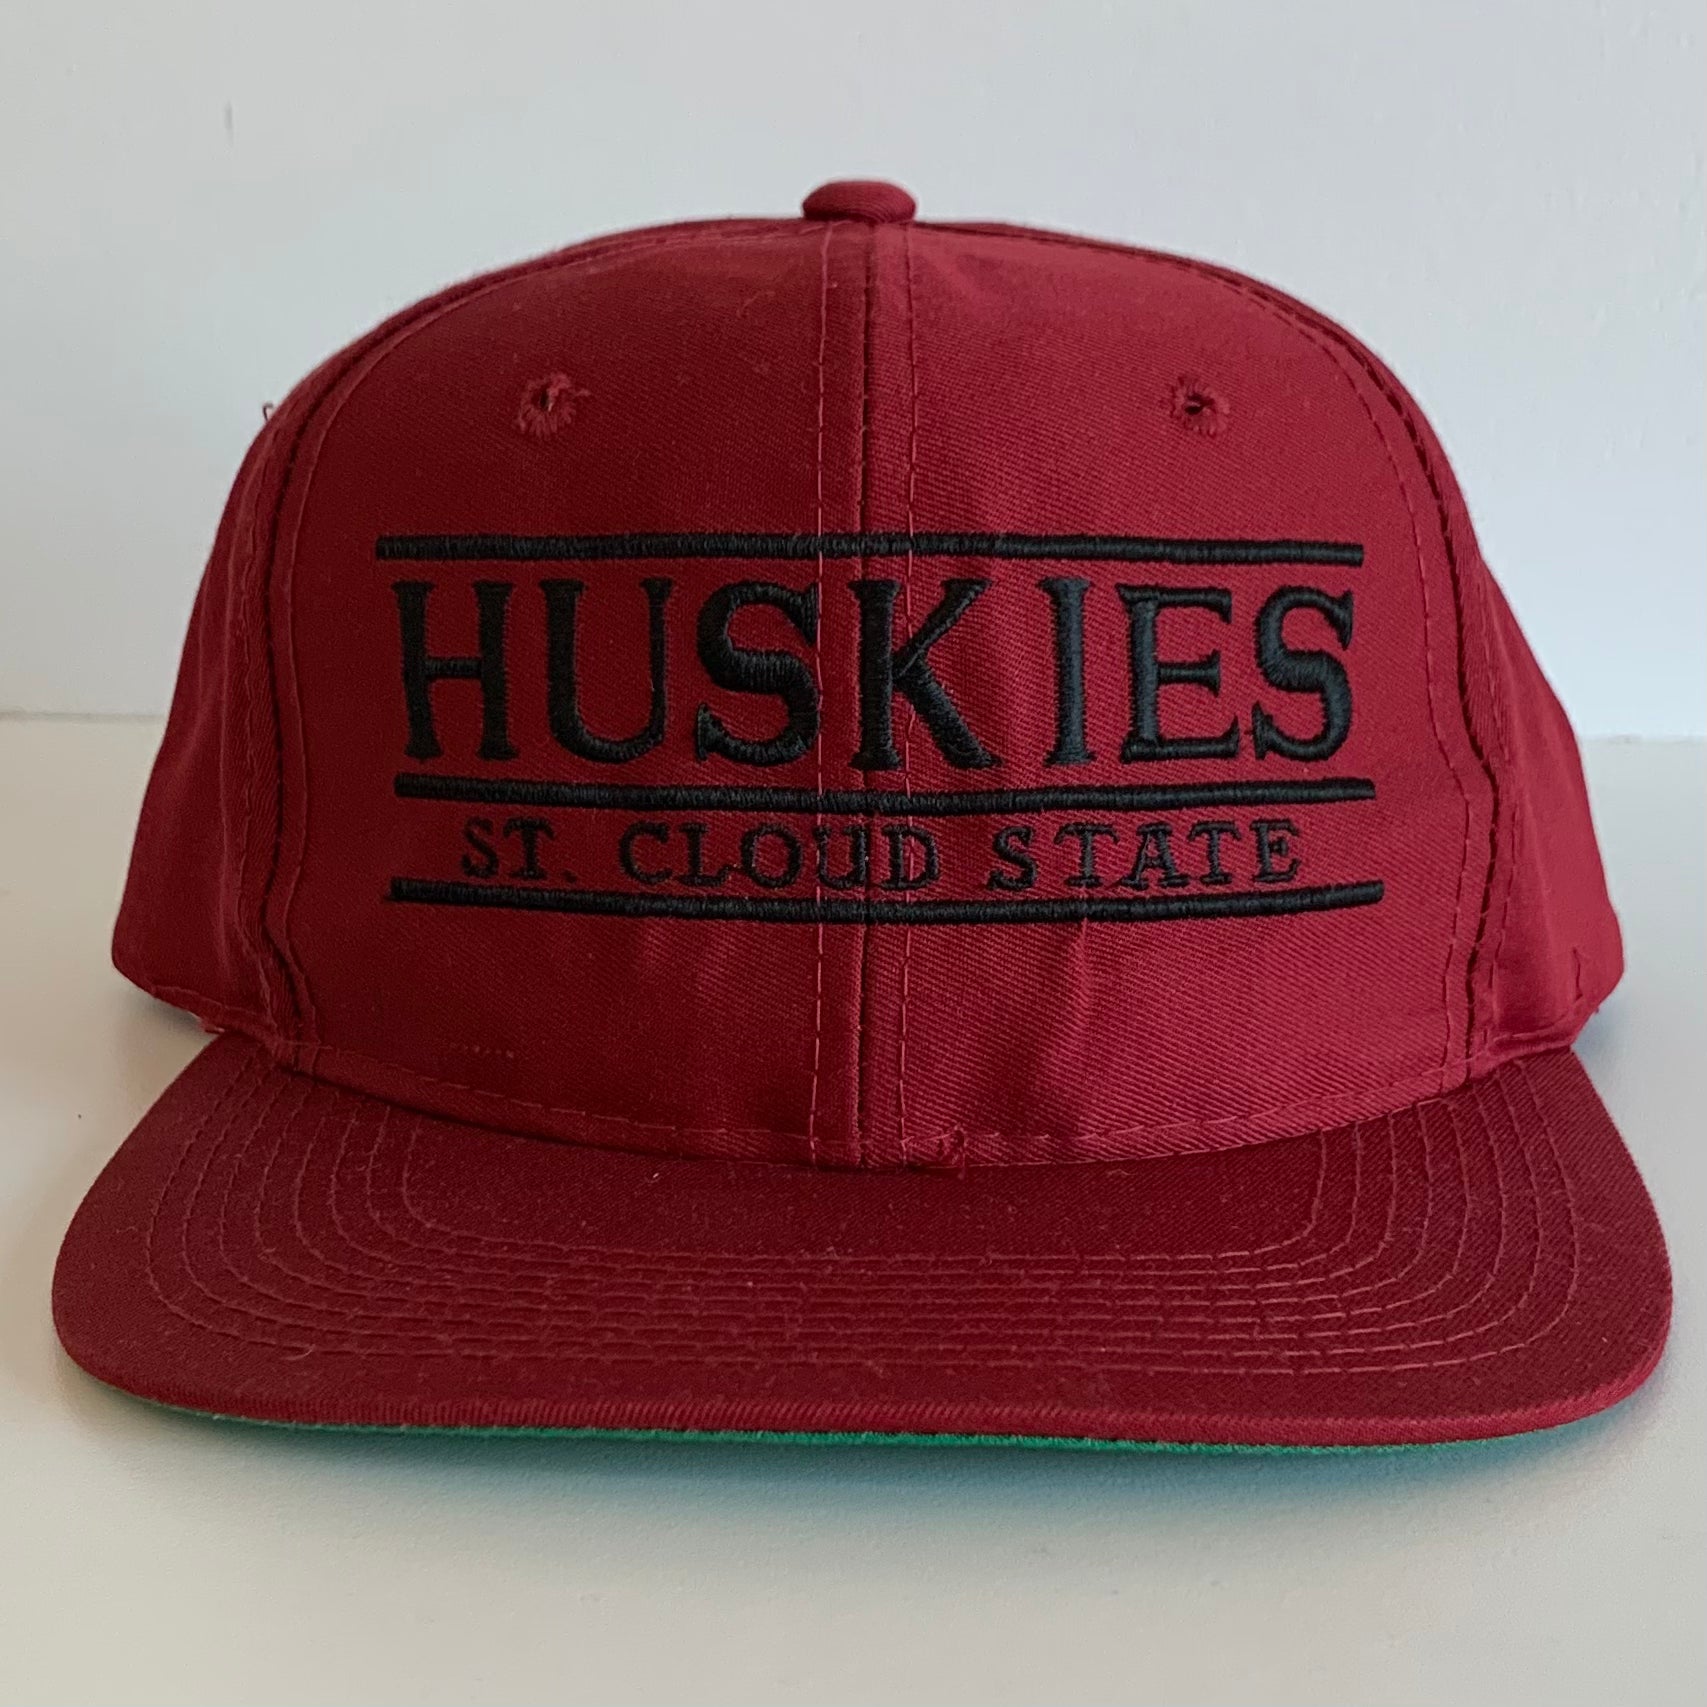 Huskies Hats for Sale